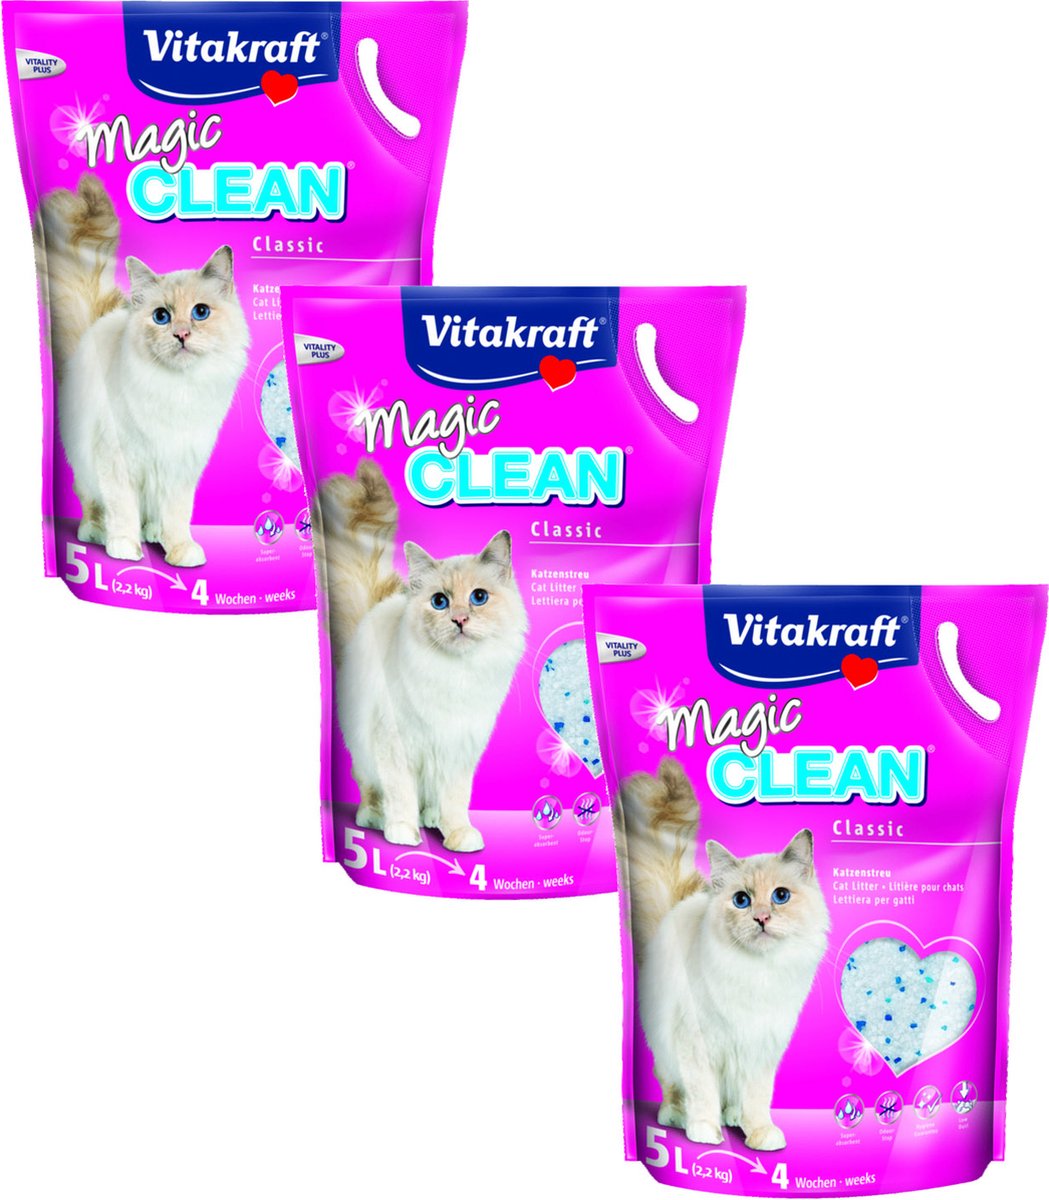 Litière pour chat Vitakraft Magic Clean – 3 x 5 l | bol.com